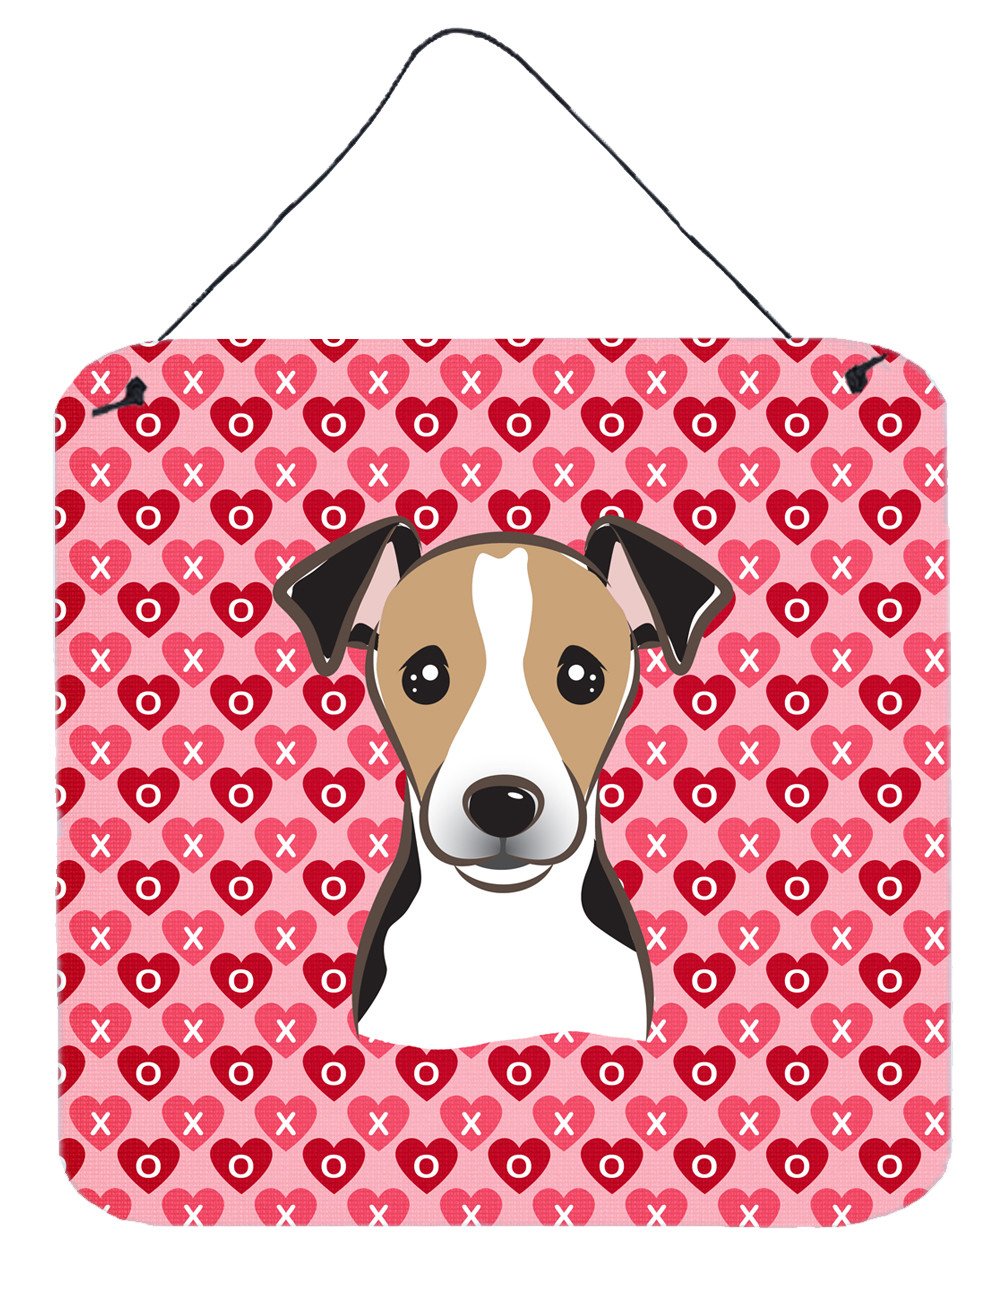 Jack Russell Terrier Hearts Wall or Door Hanging Prints BB5331DS66 by Caroline's Treasures